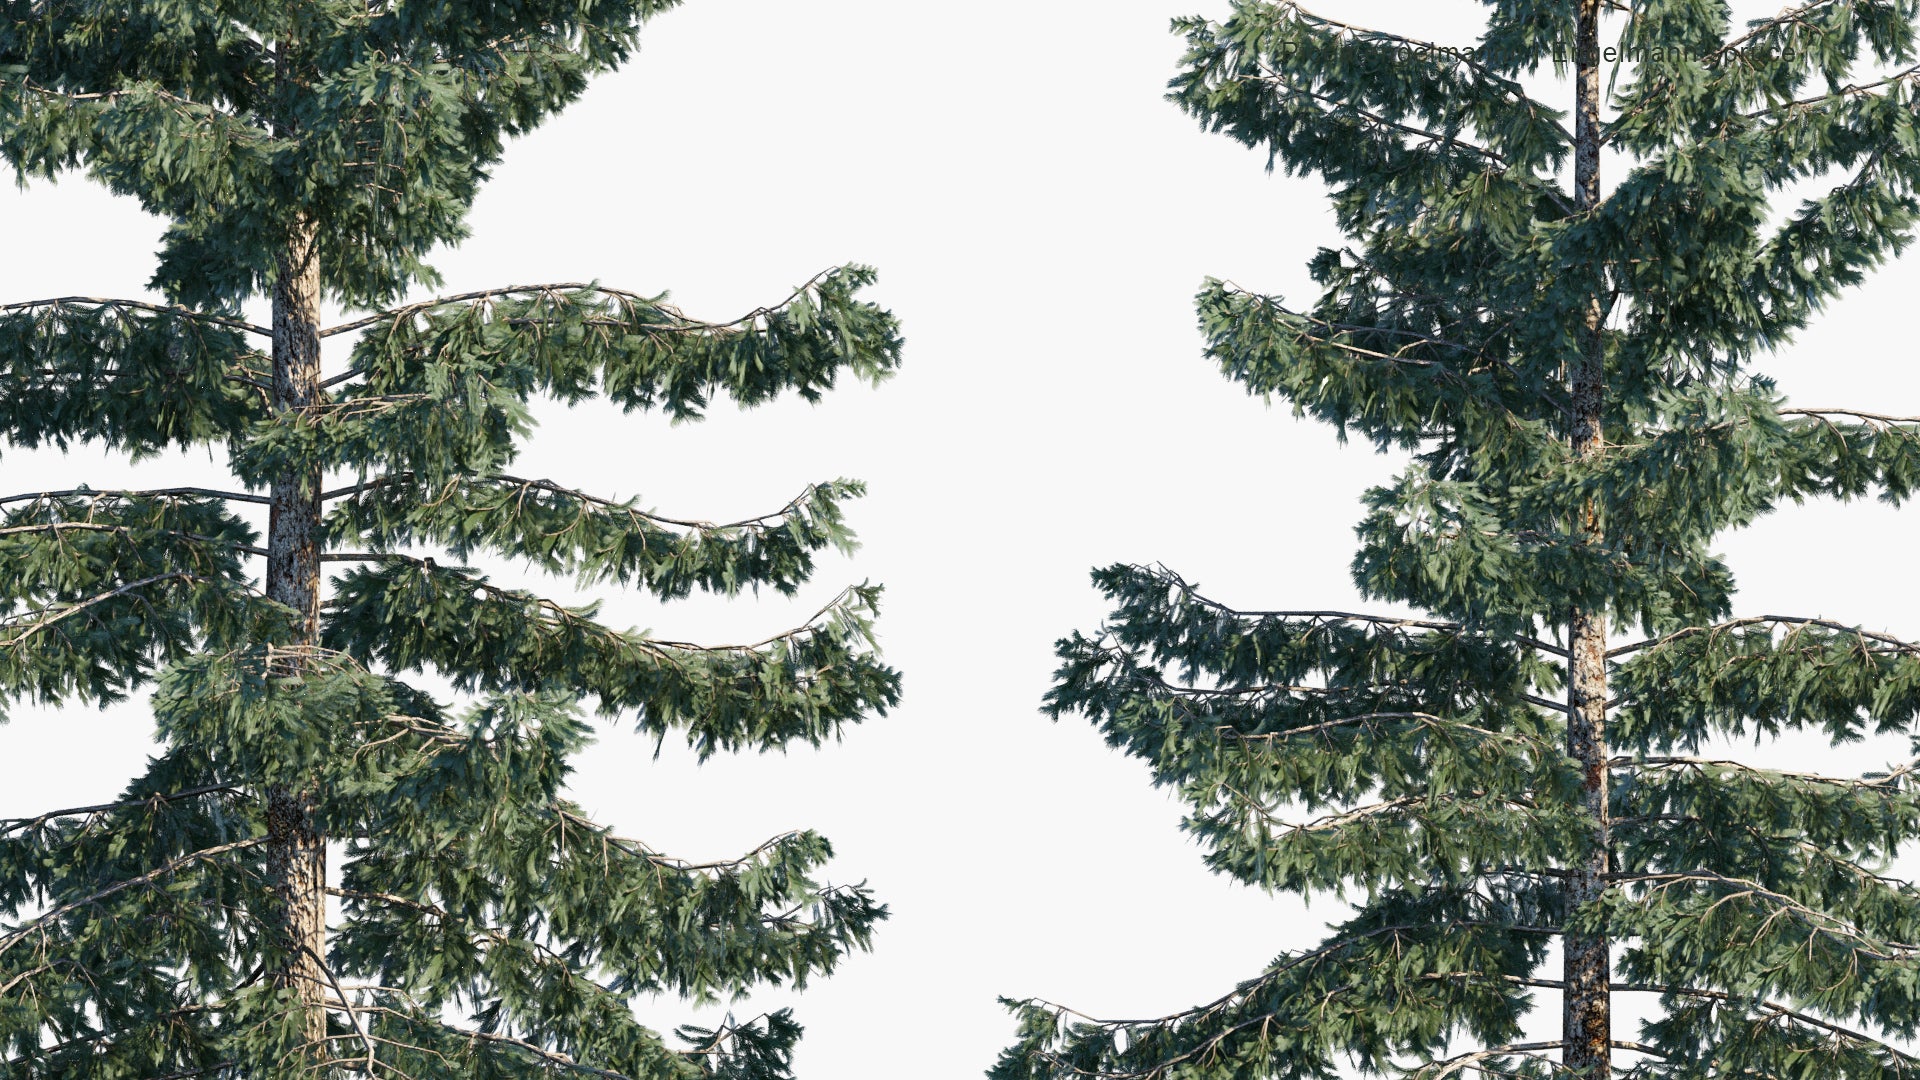 Low Poly Picea Engelmannii - Engelmann Spruce, White Spruce, Mountain Spruce (3D Model)